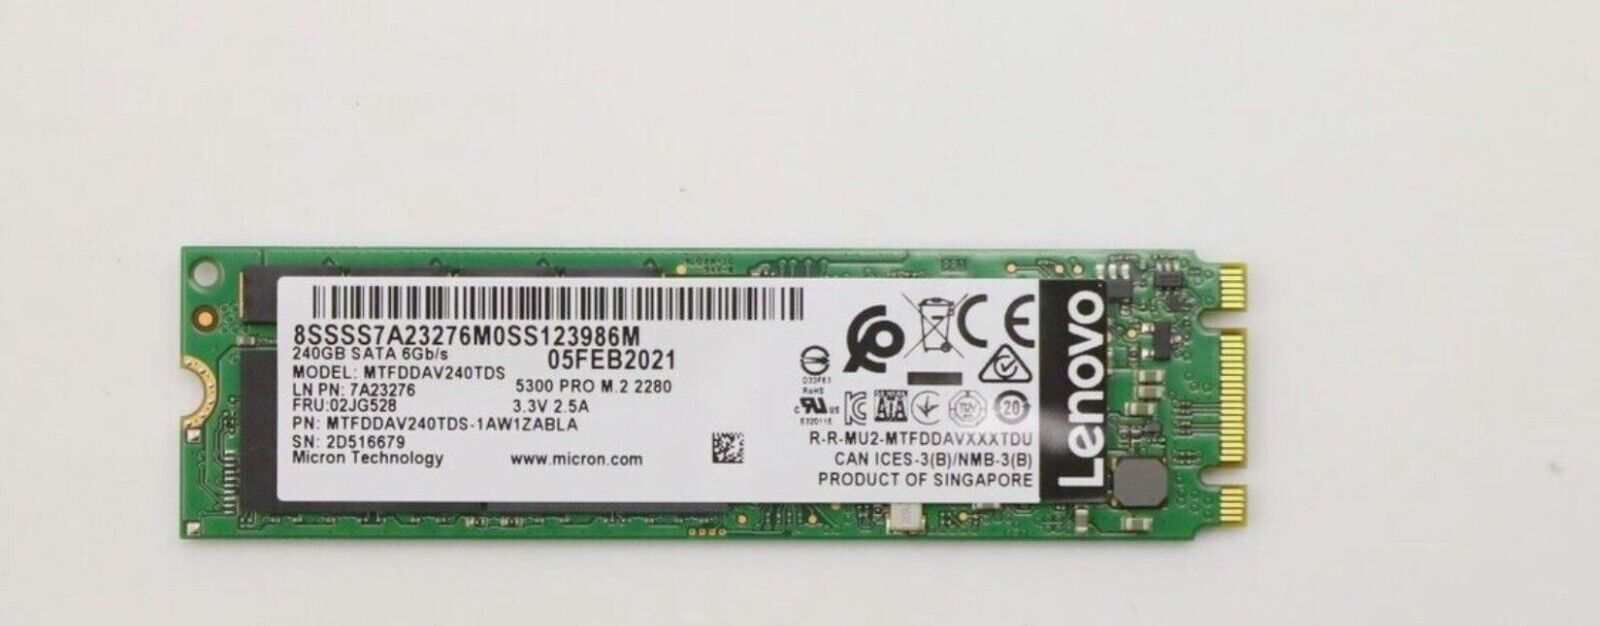 LENOVO 02JG528 - ThinkSystem M.2 5300 240GB SSD SATA 6Gbps (Non-Hot Swap)